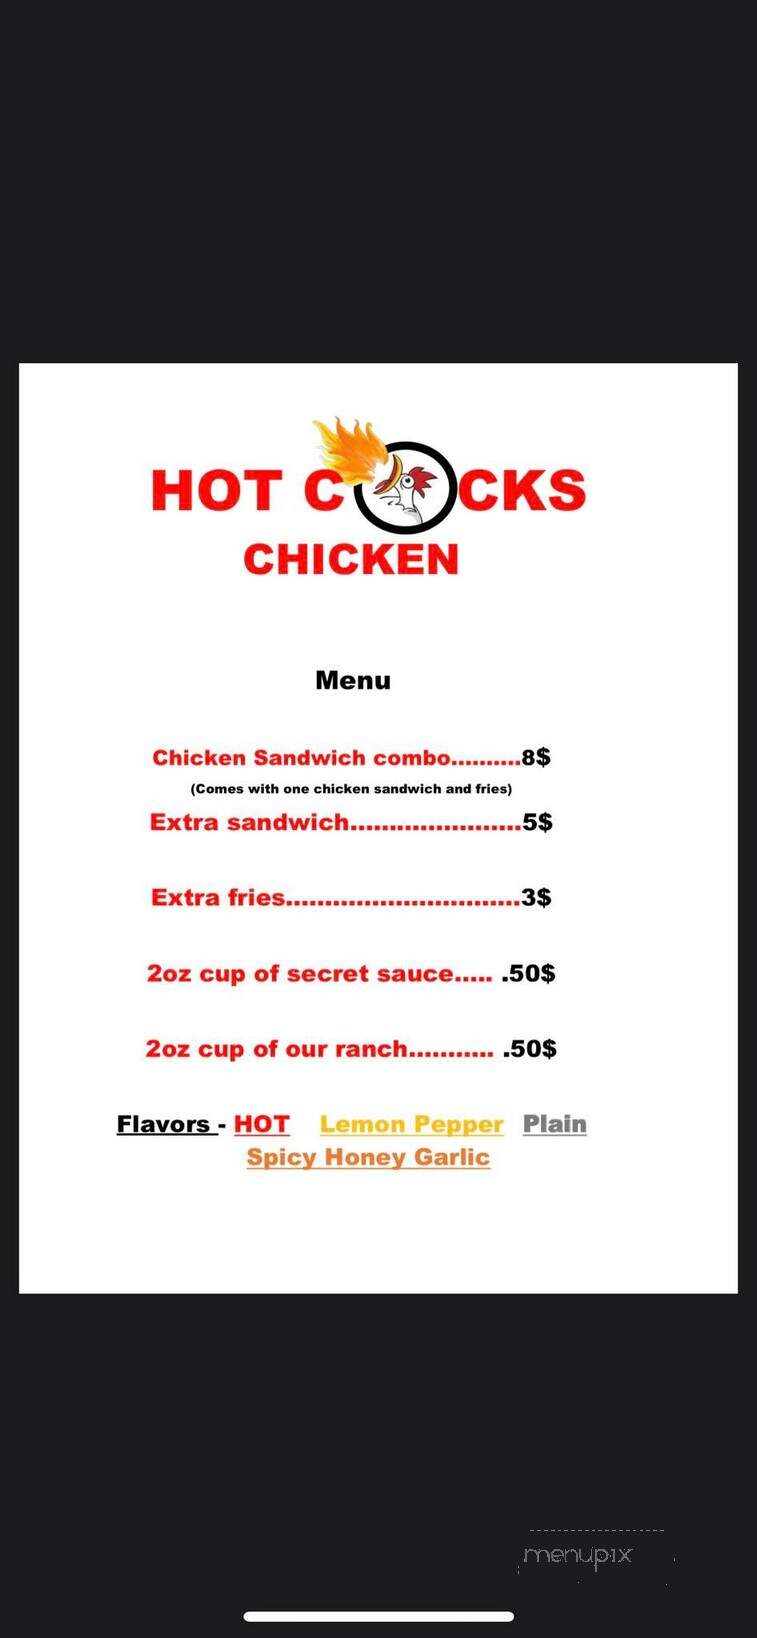 Hot Cocks Chicken - Corpus Christi, TX